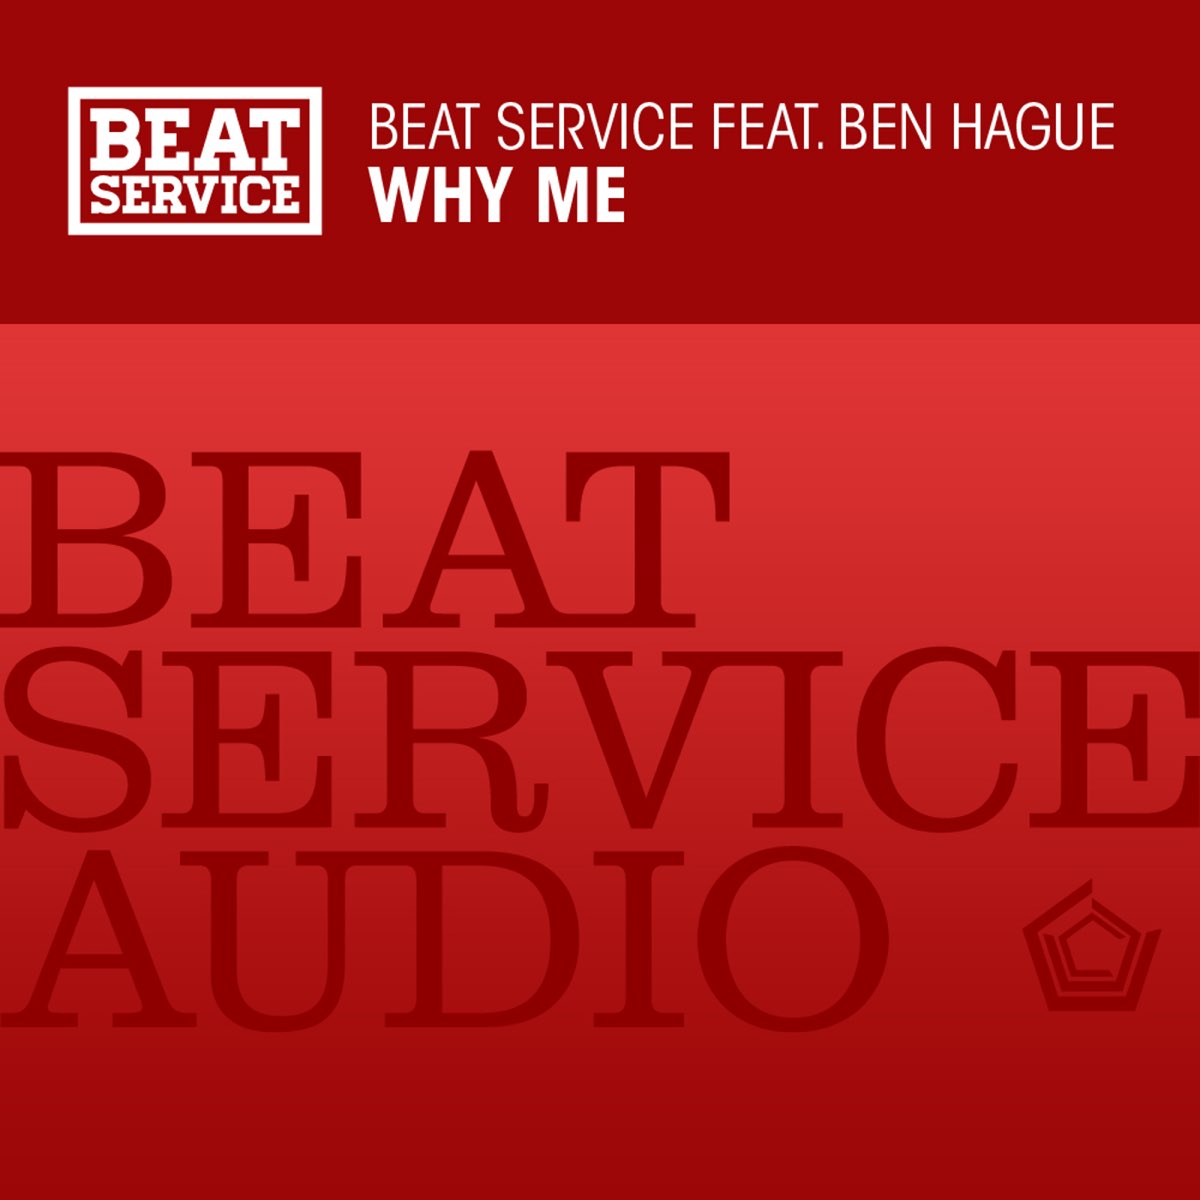 Beat service. Битс-сервис.